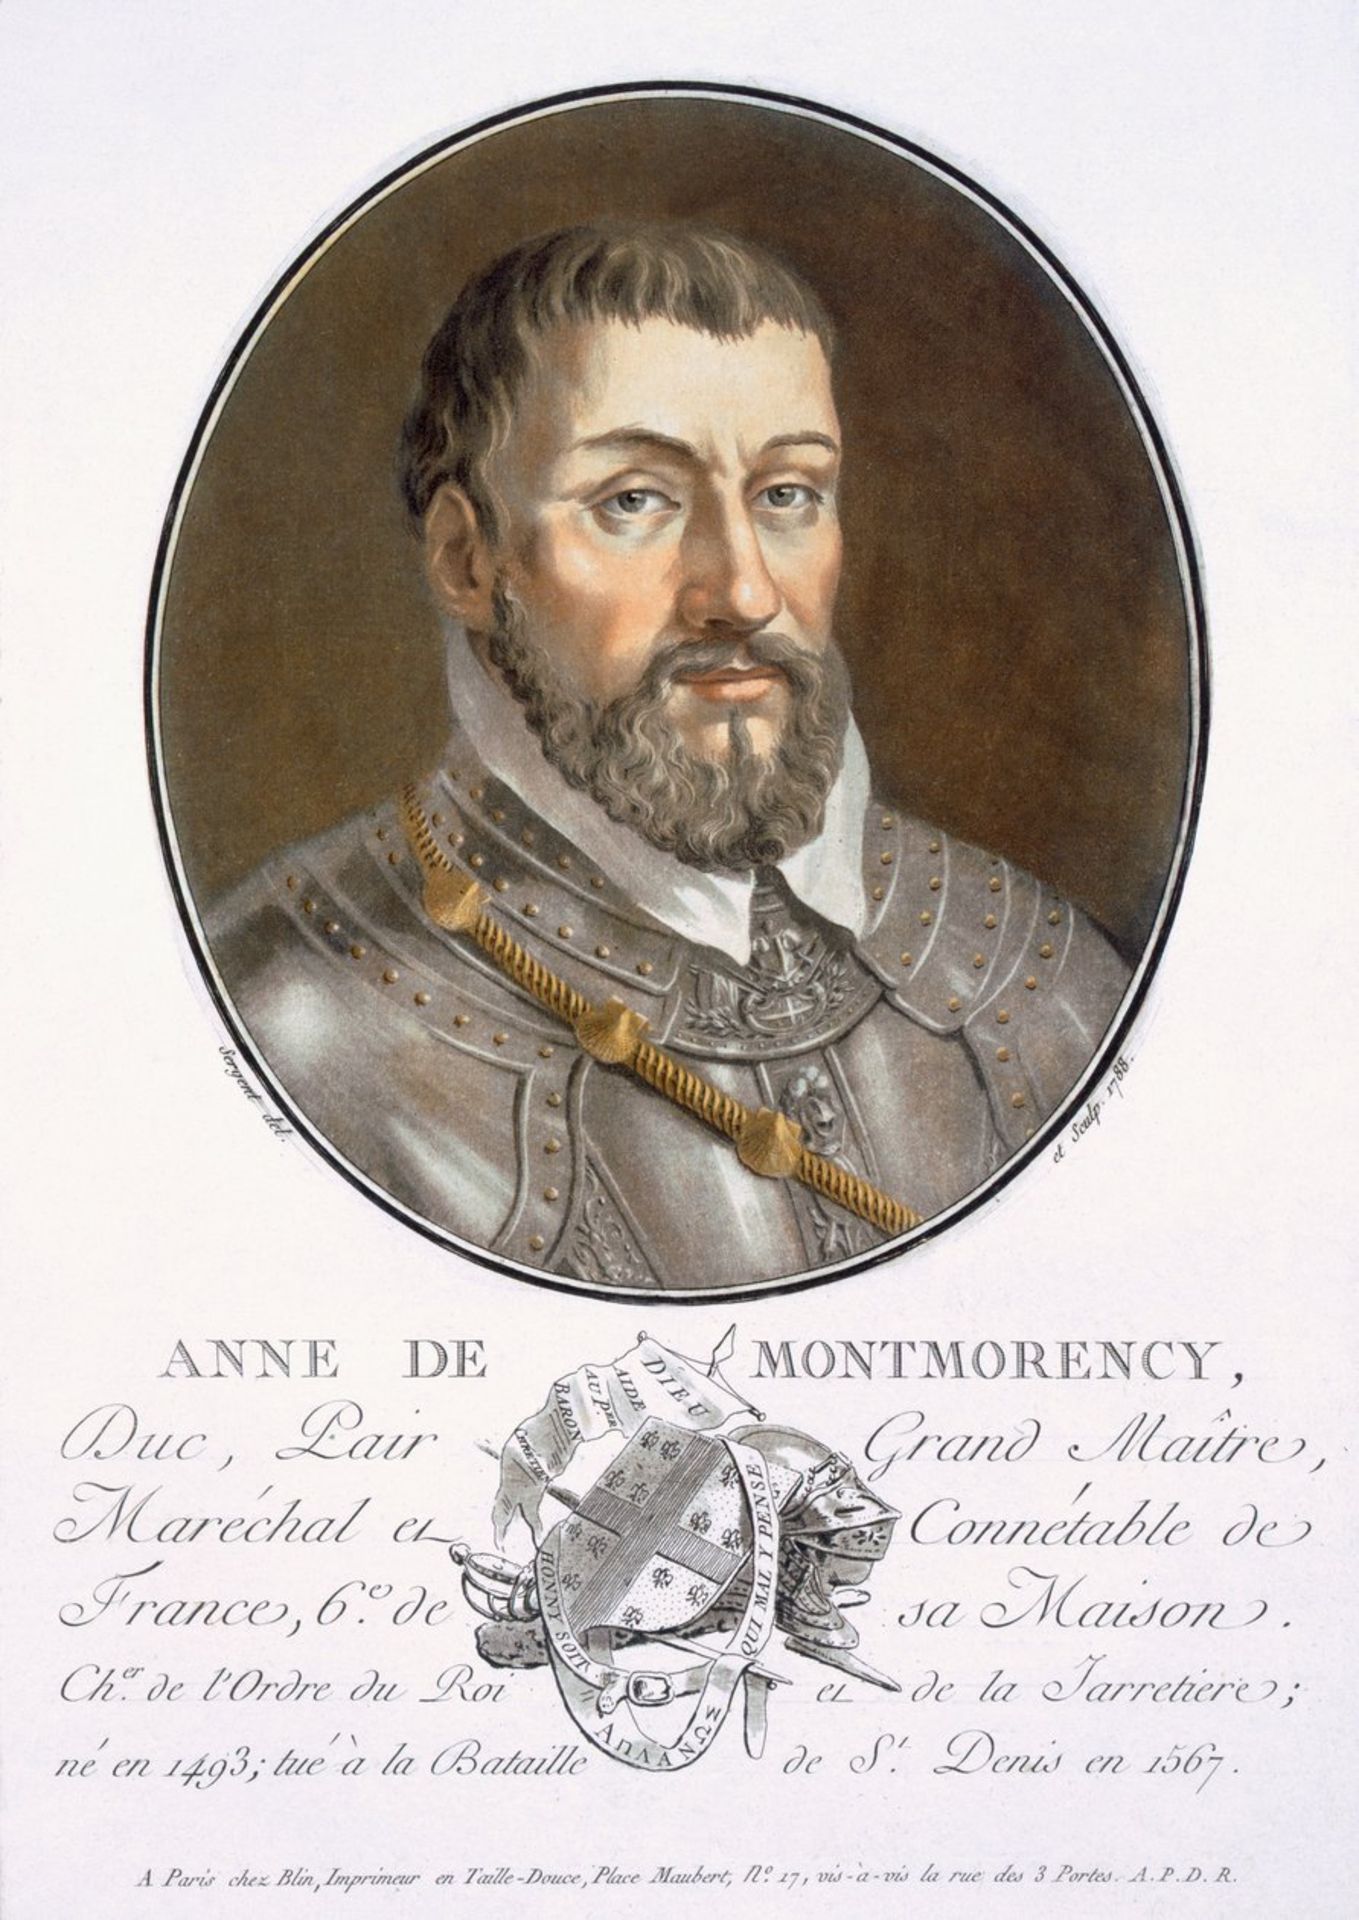 Anne de Montmorency, from Portraits des grands hommes, femmes illustres